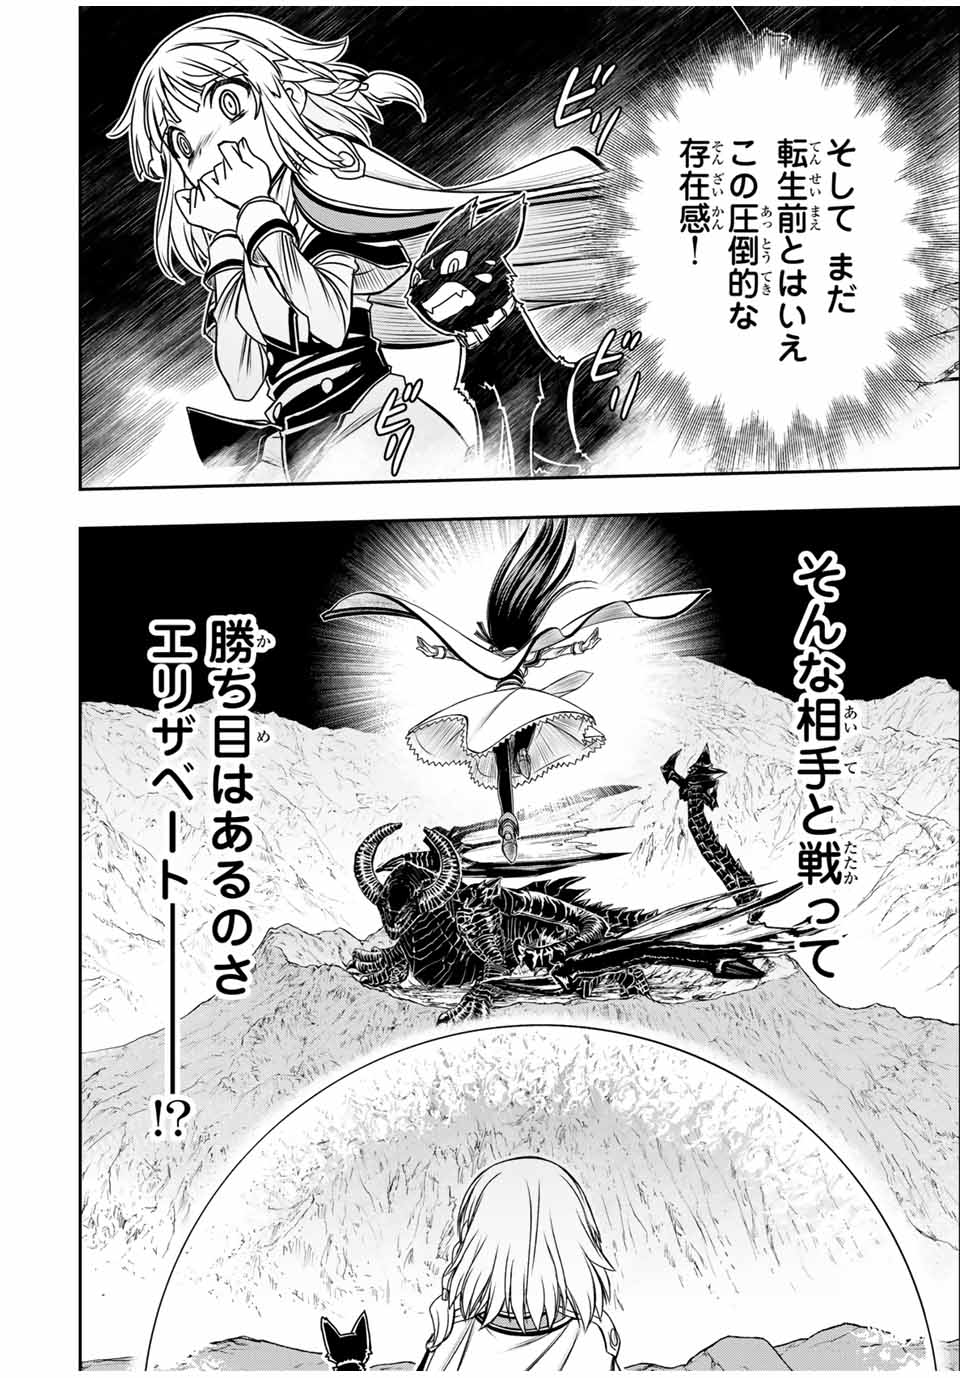 Nengan no Akuyaku Reijou (Last Boss) no Karada wo Teniiretazo!  - Chapter 21 - Page 4